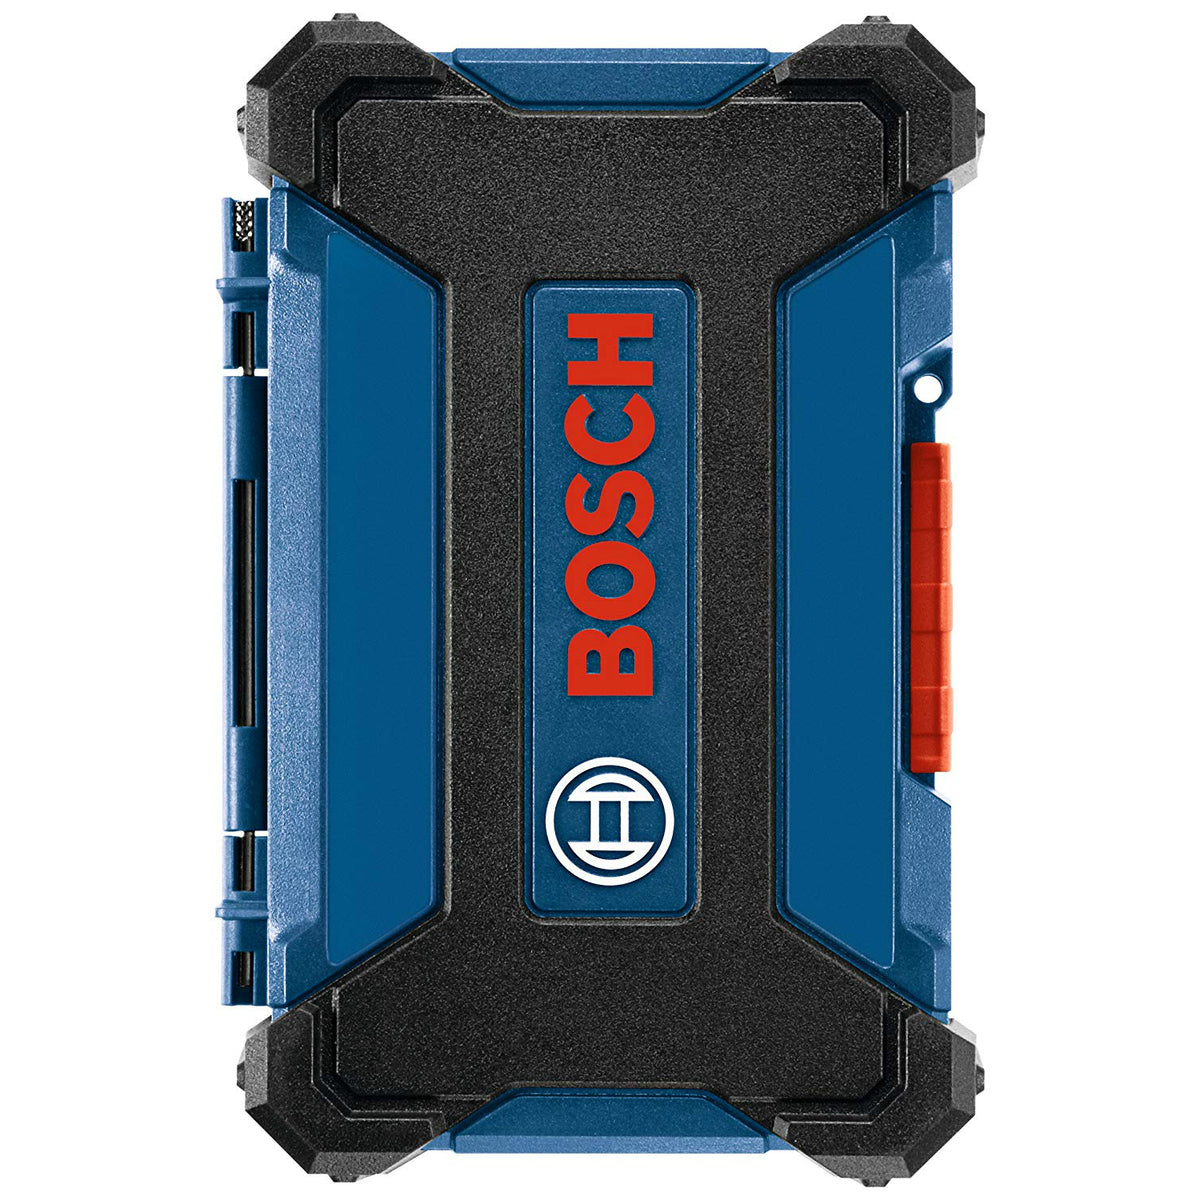 Bosch SDMS48 Impact Tough Screwdriving Custom Case System Set, 48-Piece